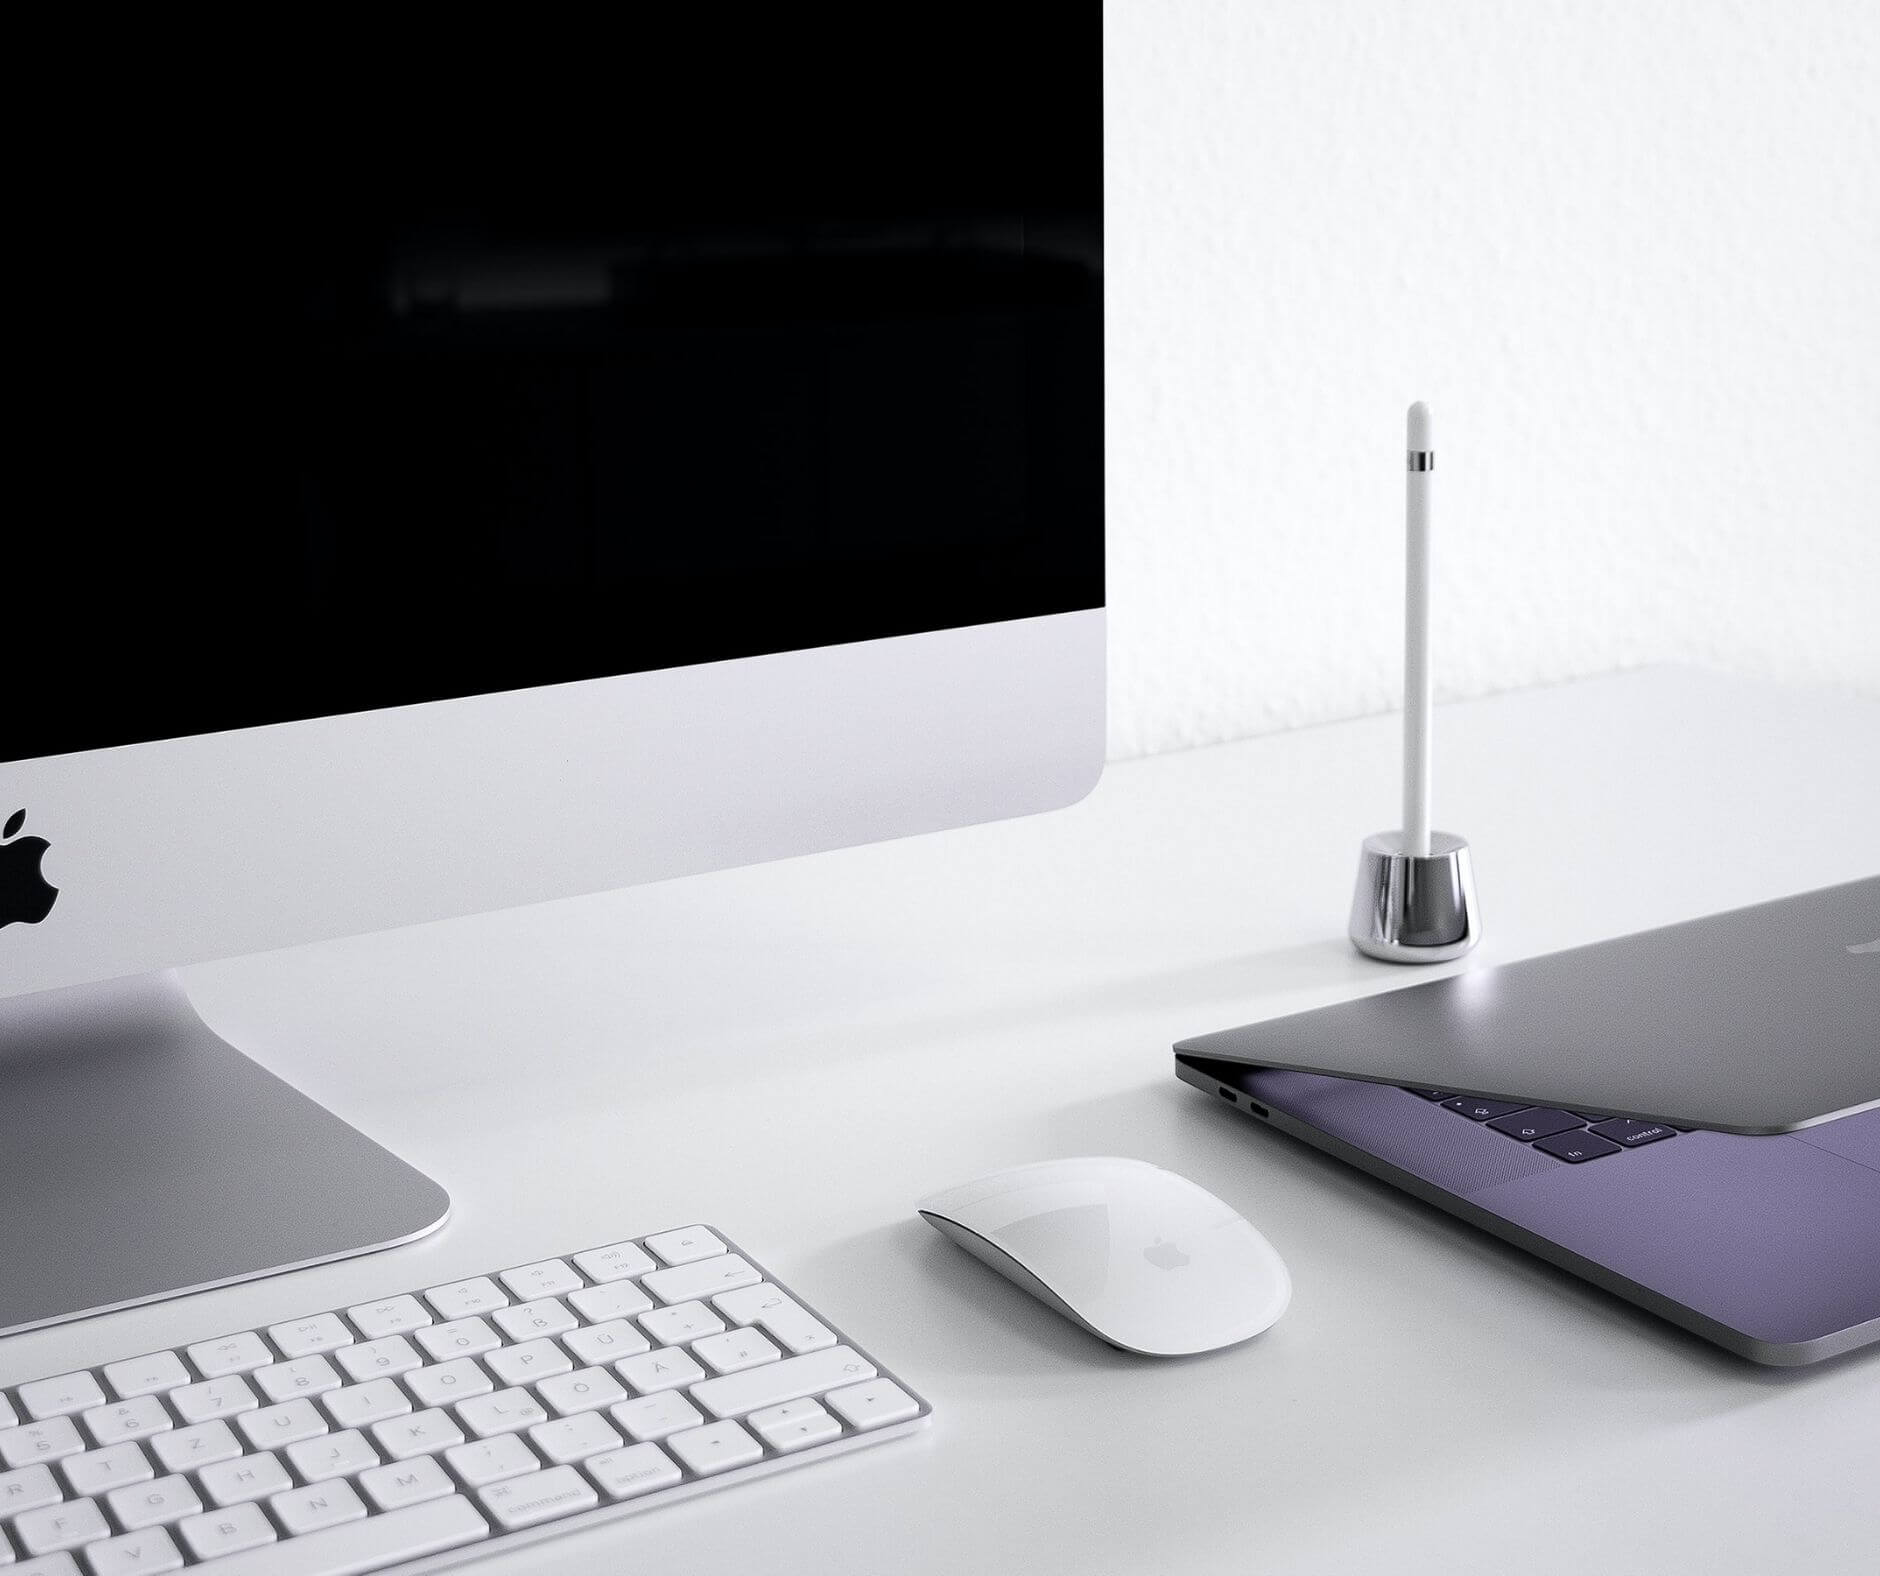 Close-up photograph of desktop, laptop and mouse.